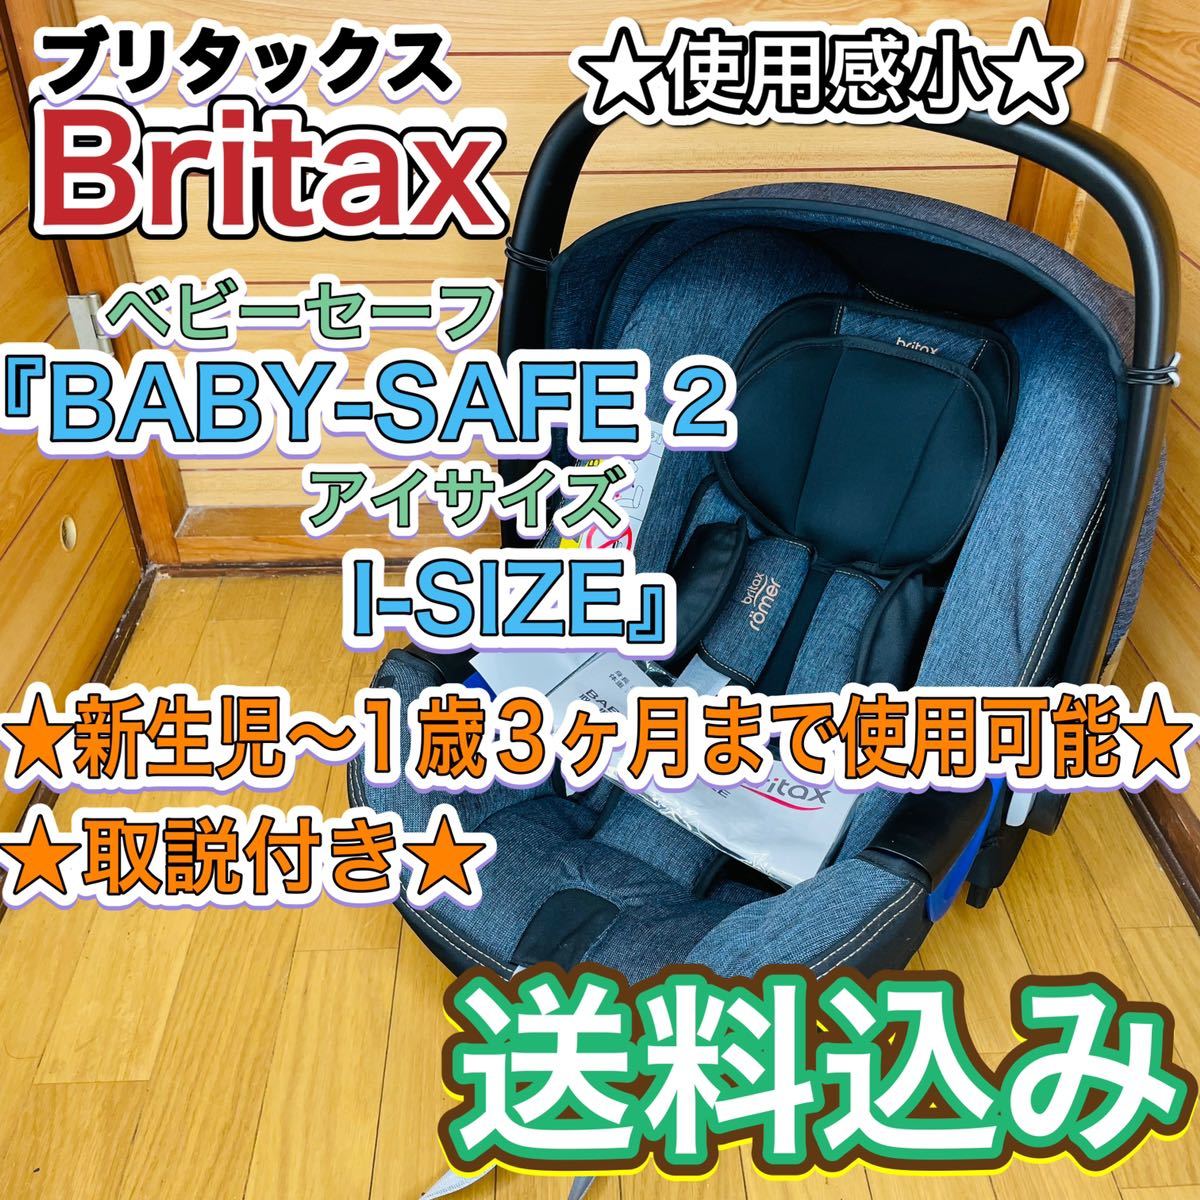 britax BABY-SAFE2 i-SIZE チャイルドシート - 移動用品